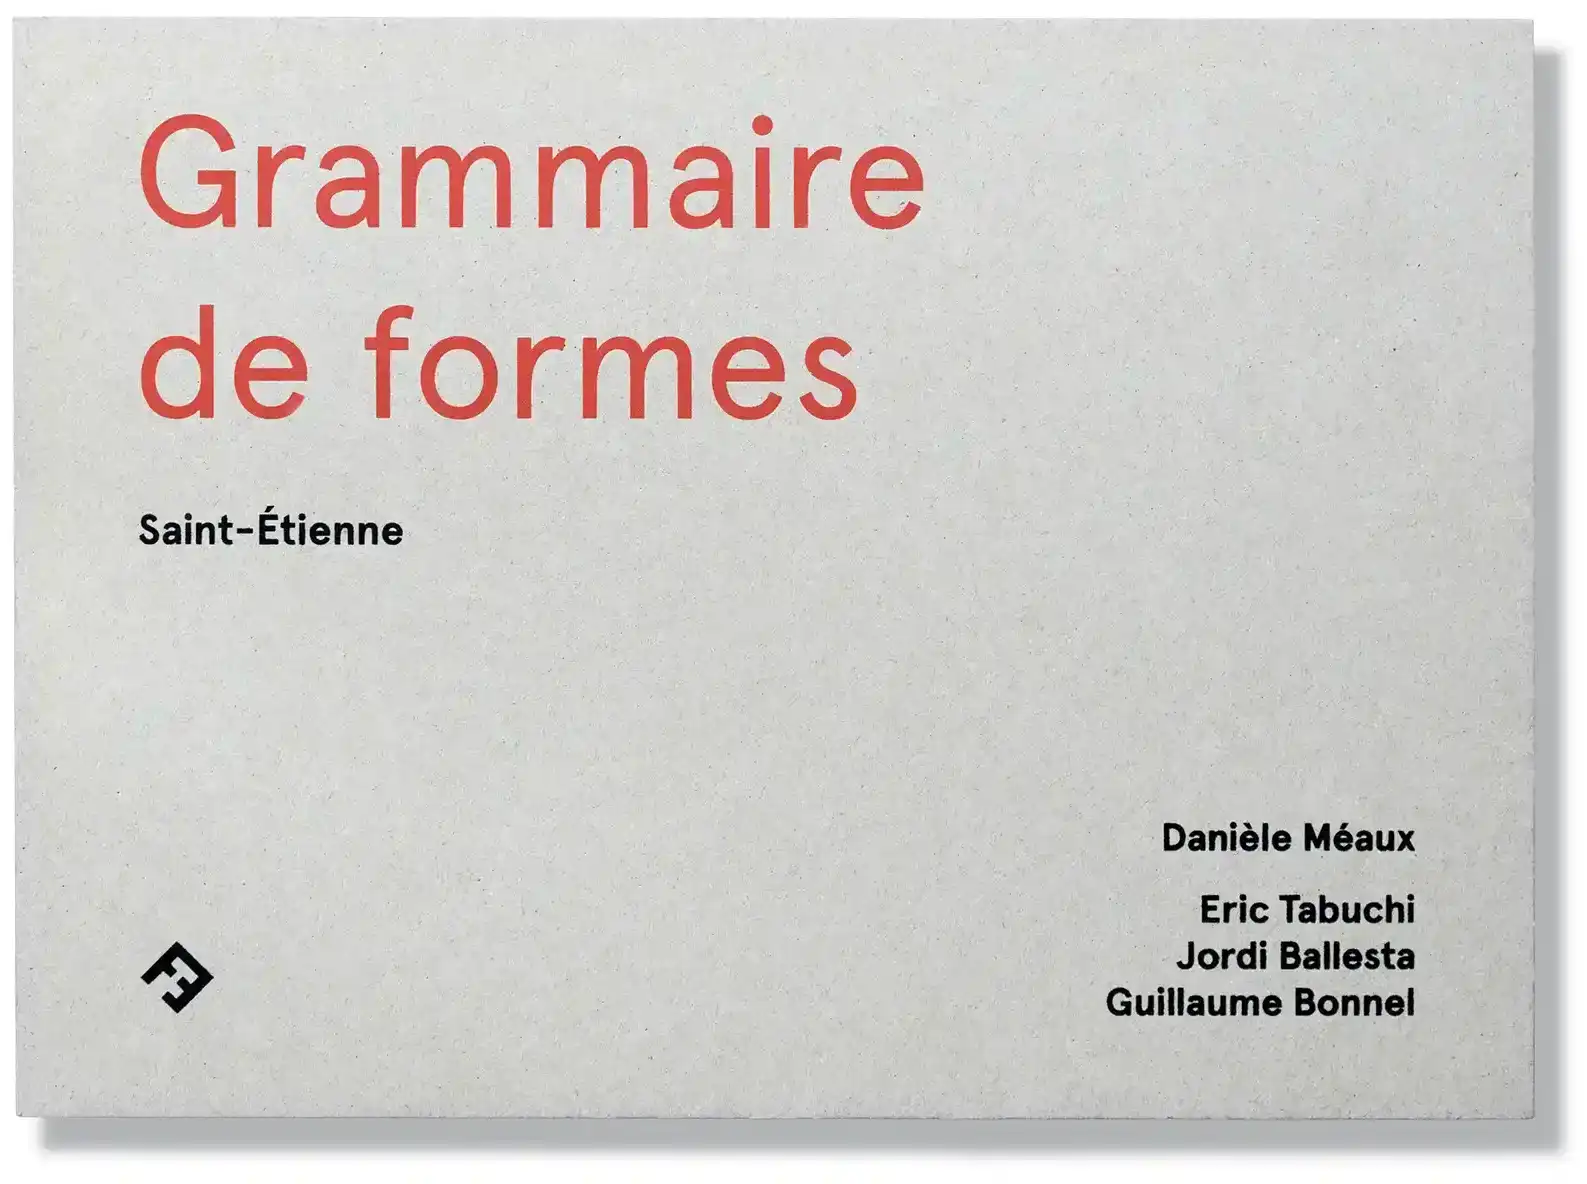 Grammaire de formes, Guillaume Bonnel, Eric Tabuchi, Jordi Ballesta